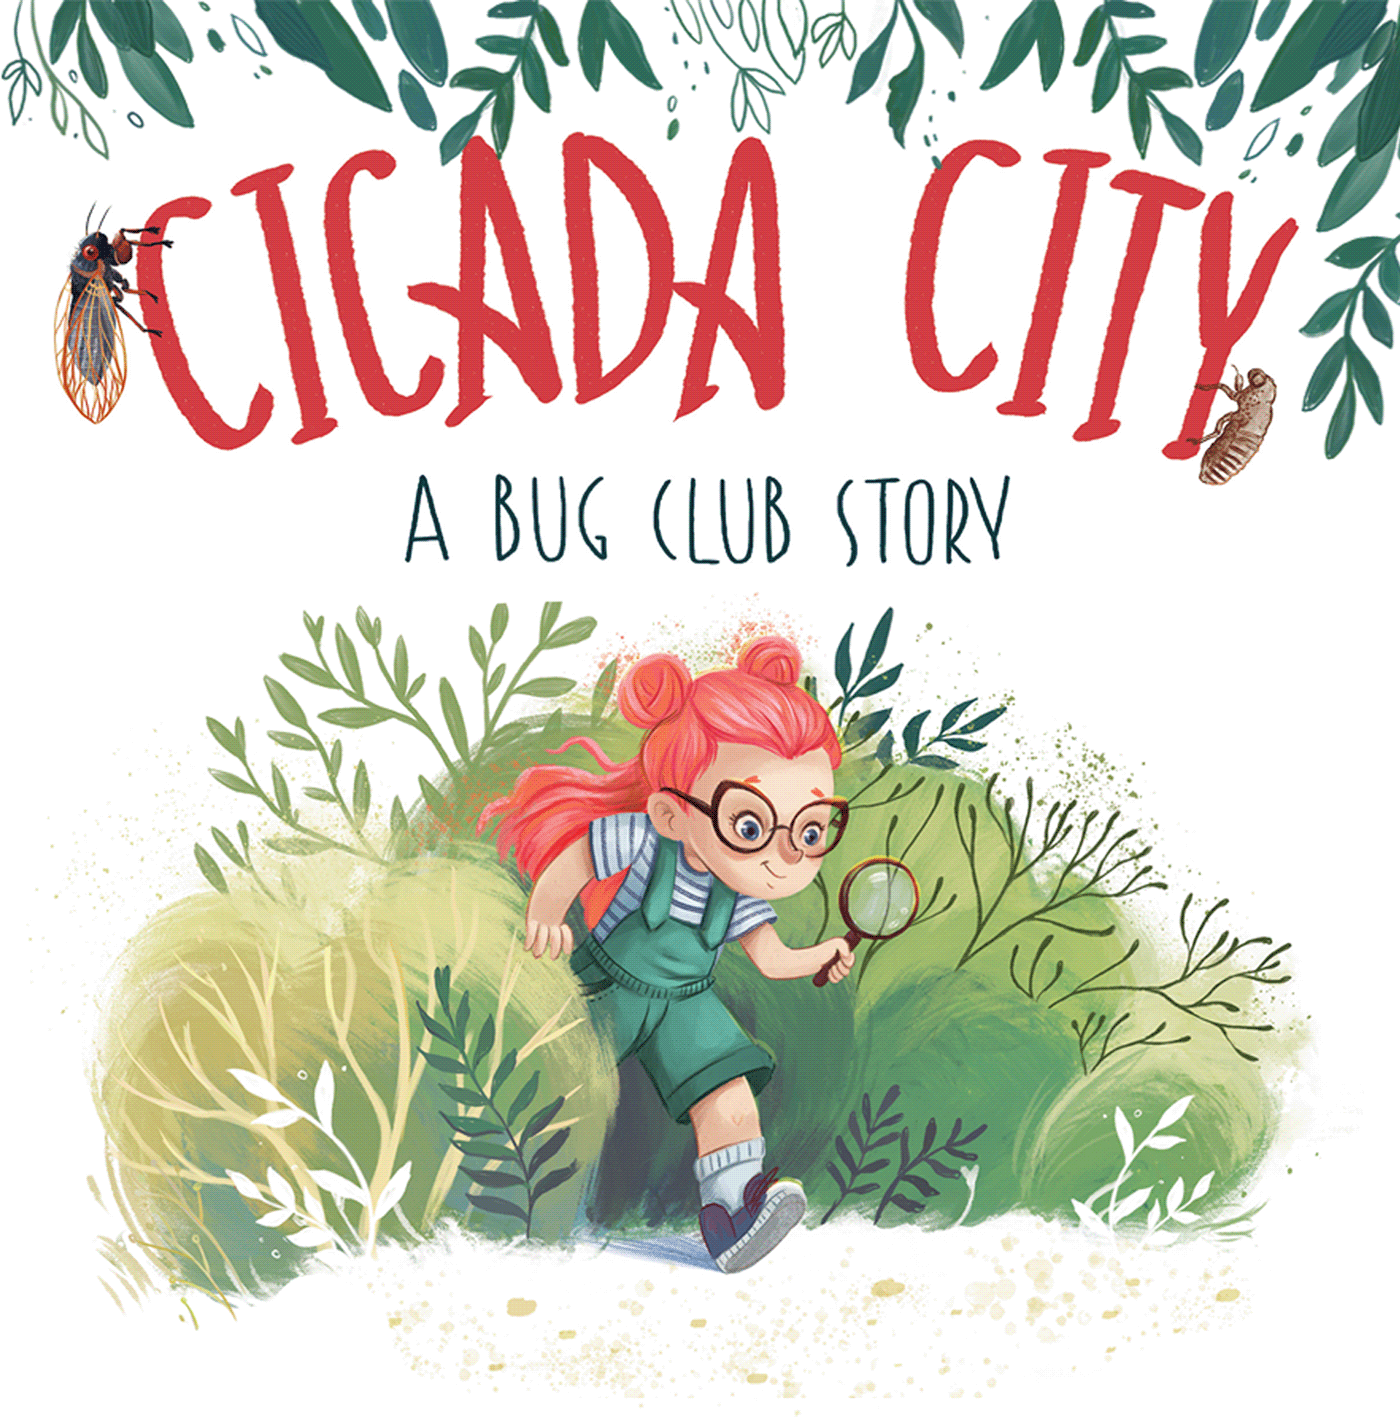 Cicada City: A Bug Club Story on Behance